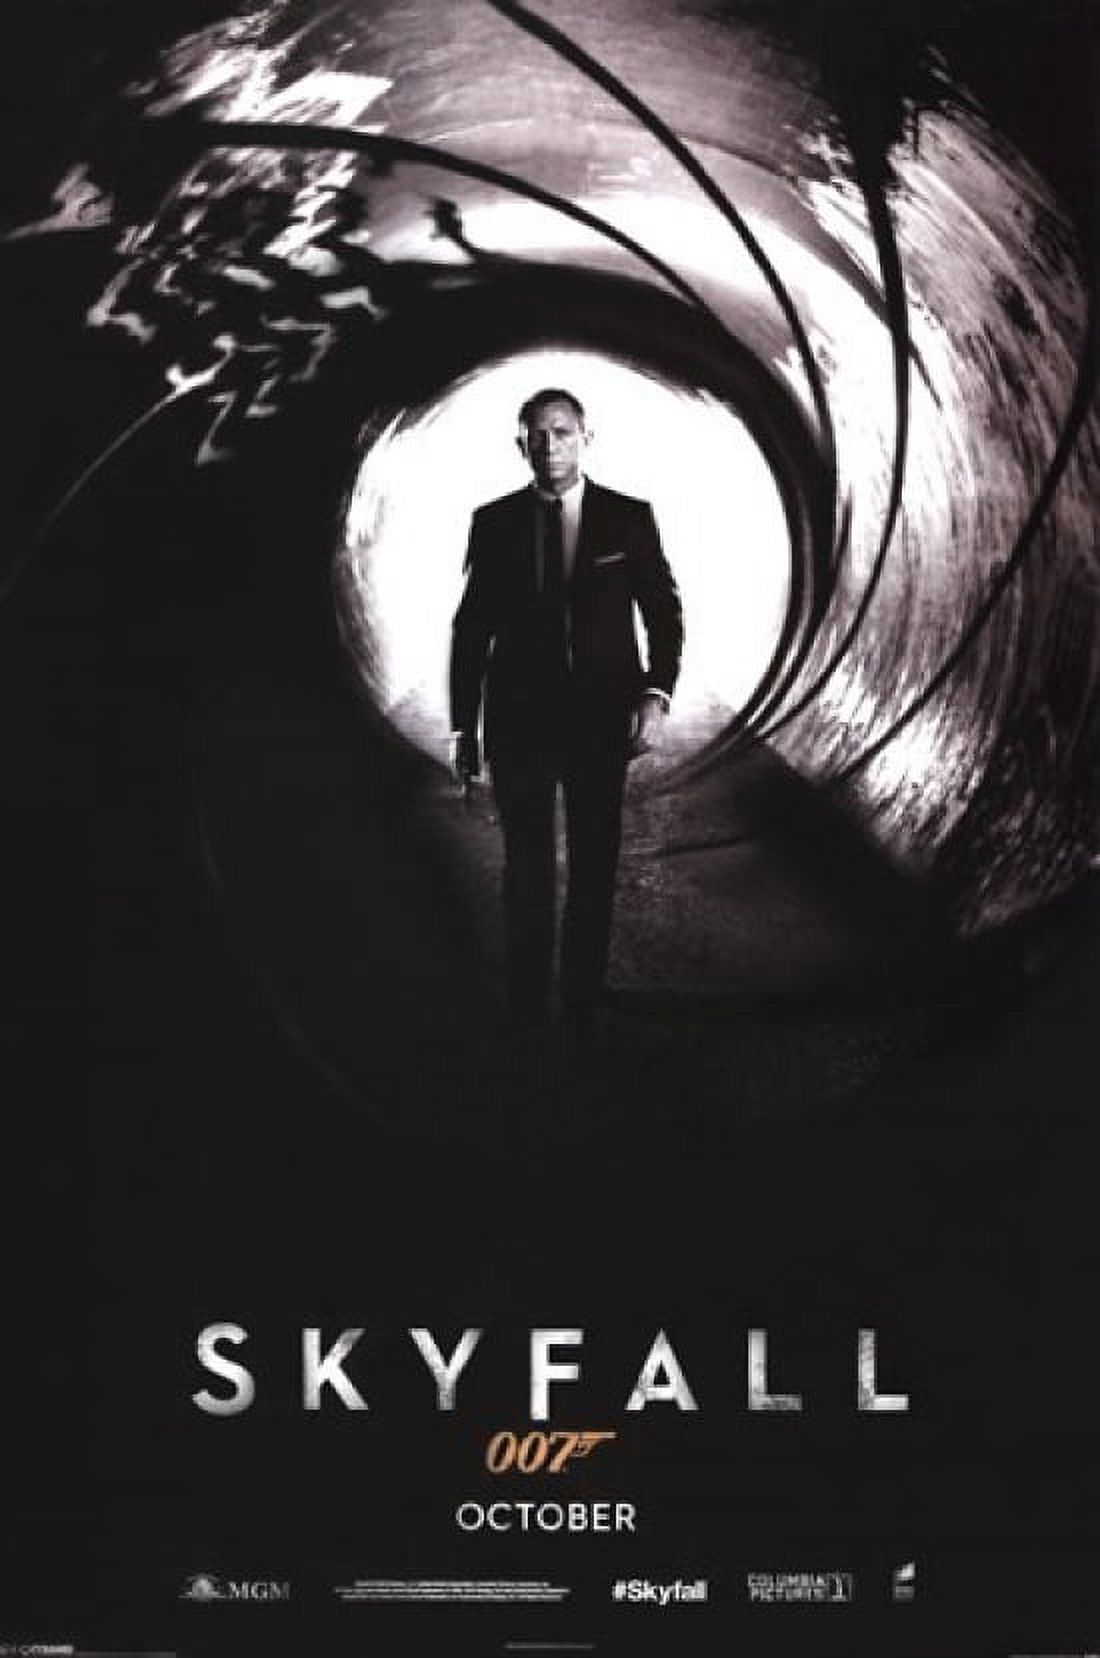 James Bond - Skyfall Teaser Poster (24 x 36) - image 1 of 1